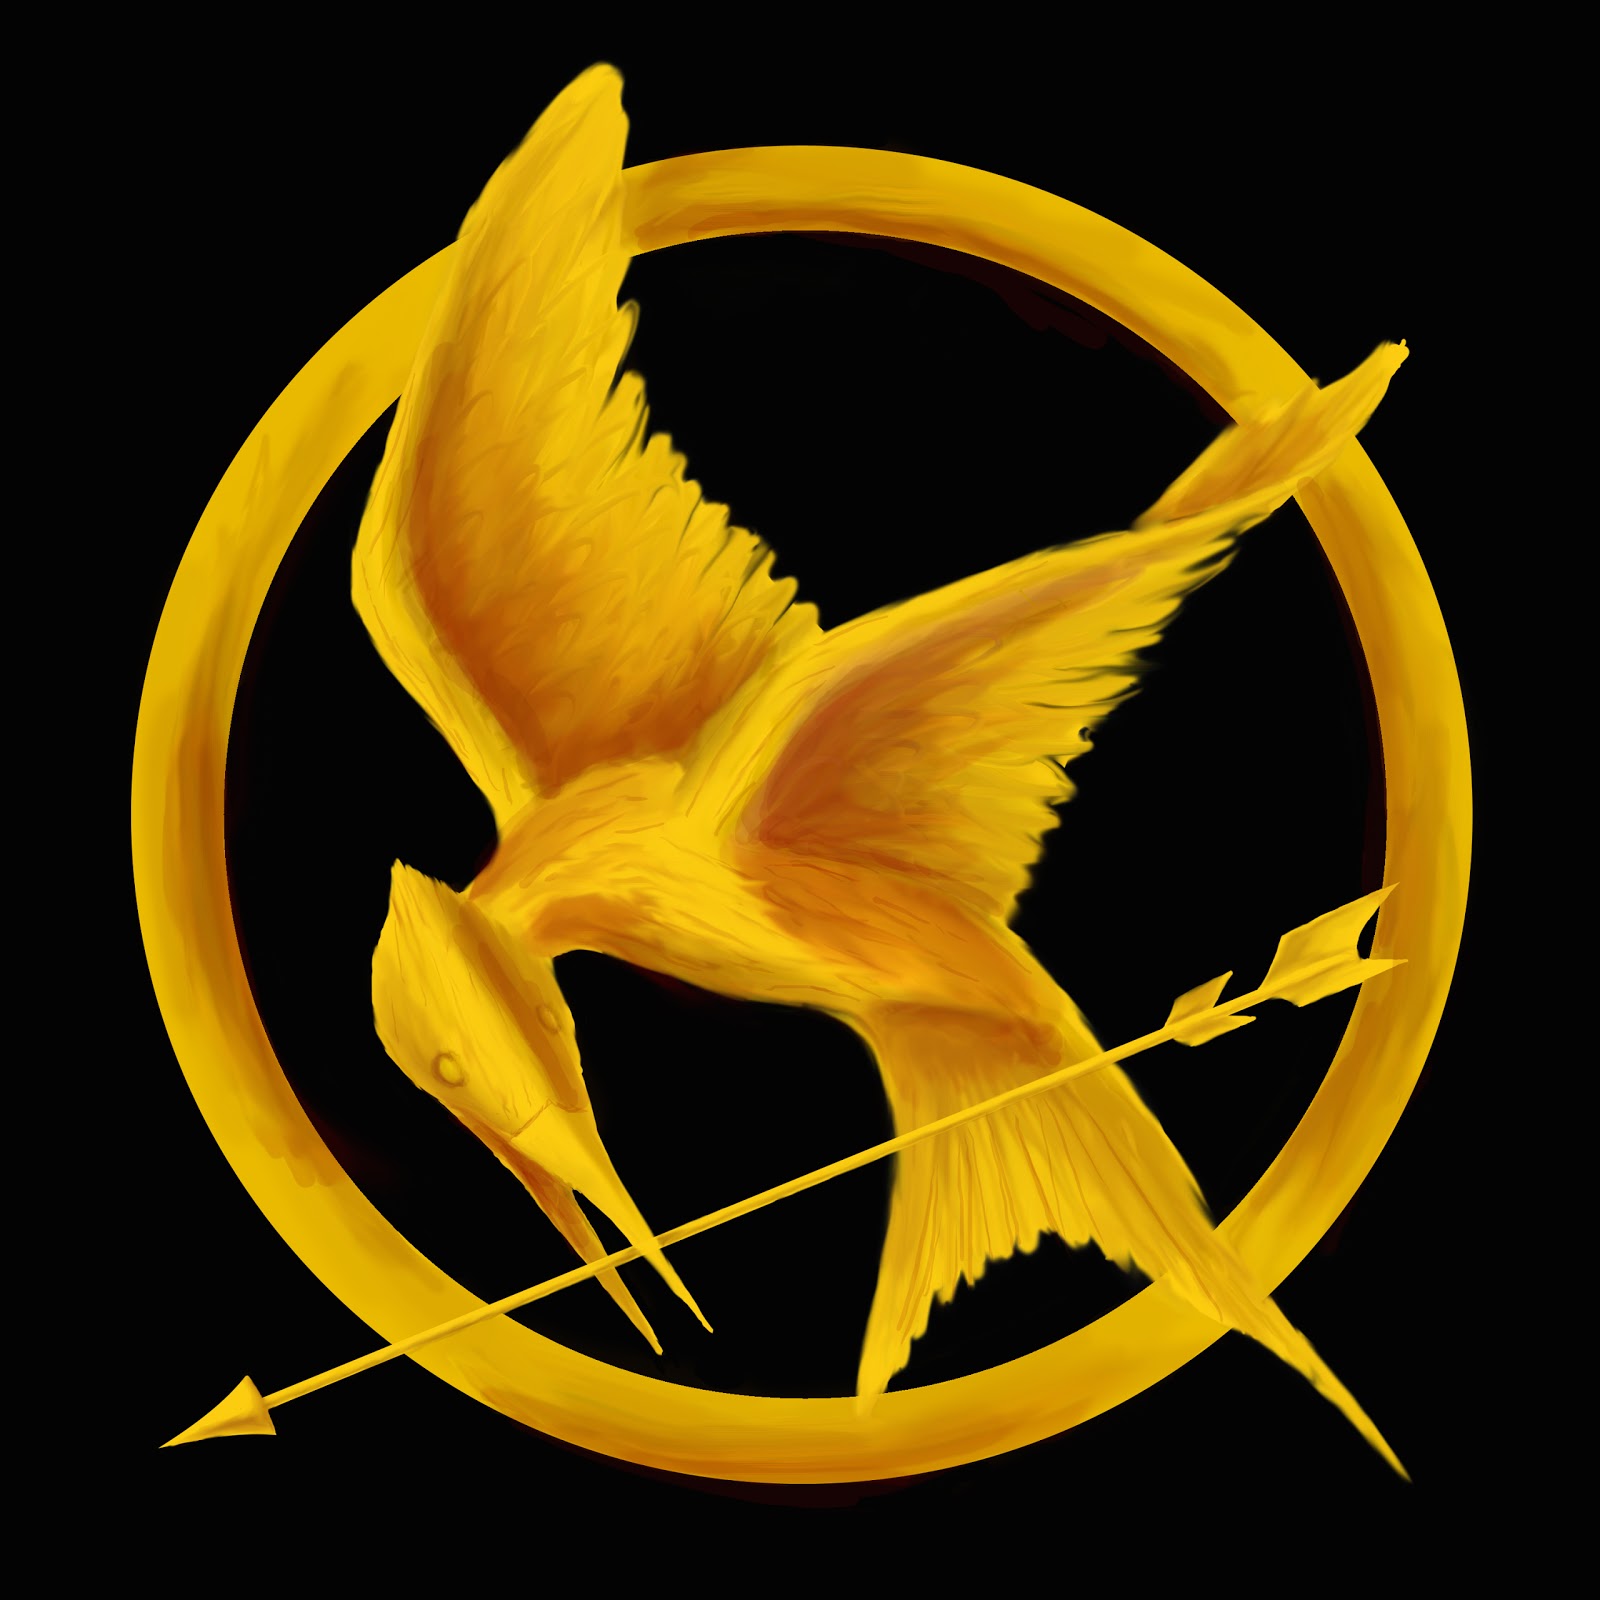 Hunger Games Mockingjay Pin free image